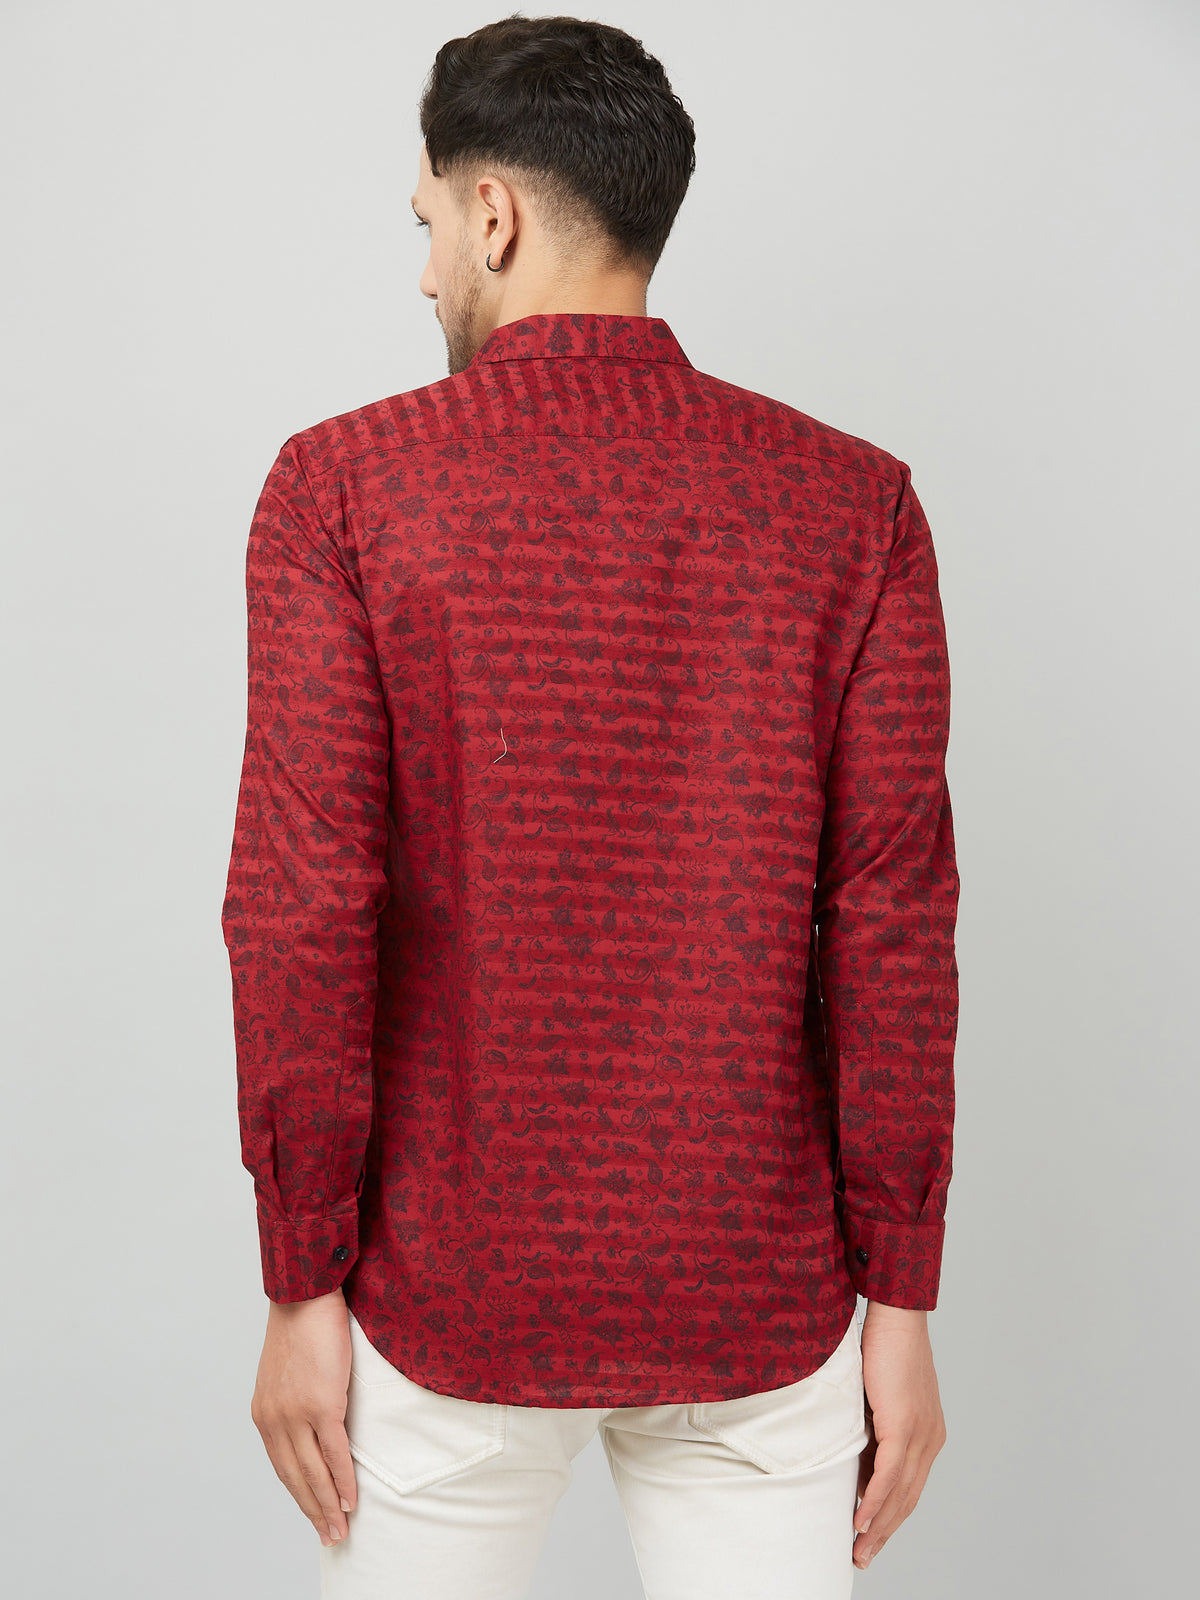 Louis Monarch Men Regular Fit Red Printed Spread Collar Casual Shirt